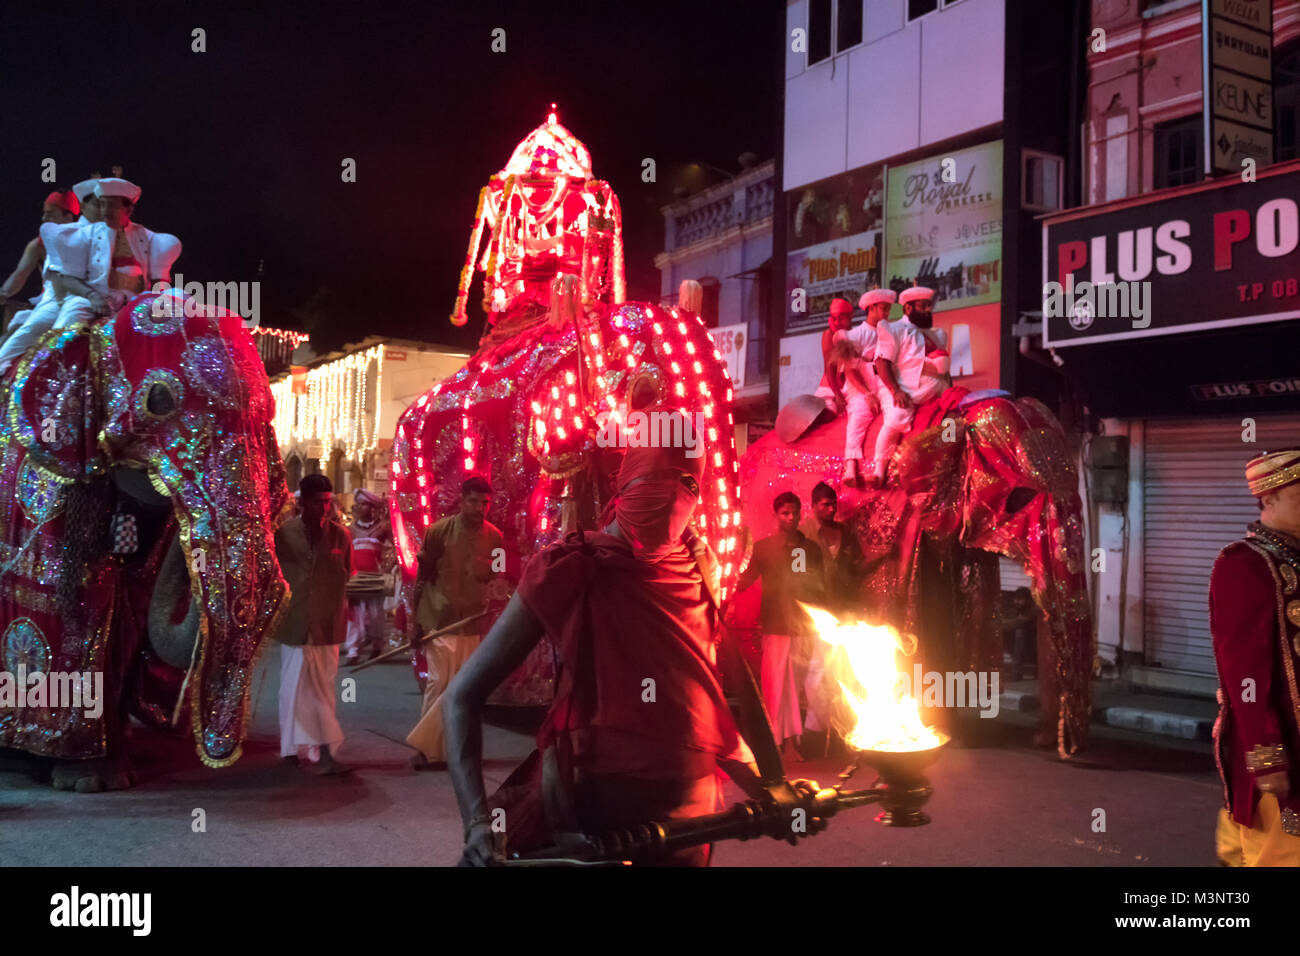 Sri Lanka Kandy Esala Perahera parade elephants costume caparison procession at night man carrying fire torch Stock Photo